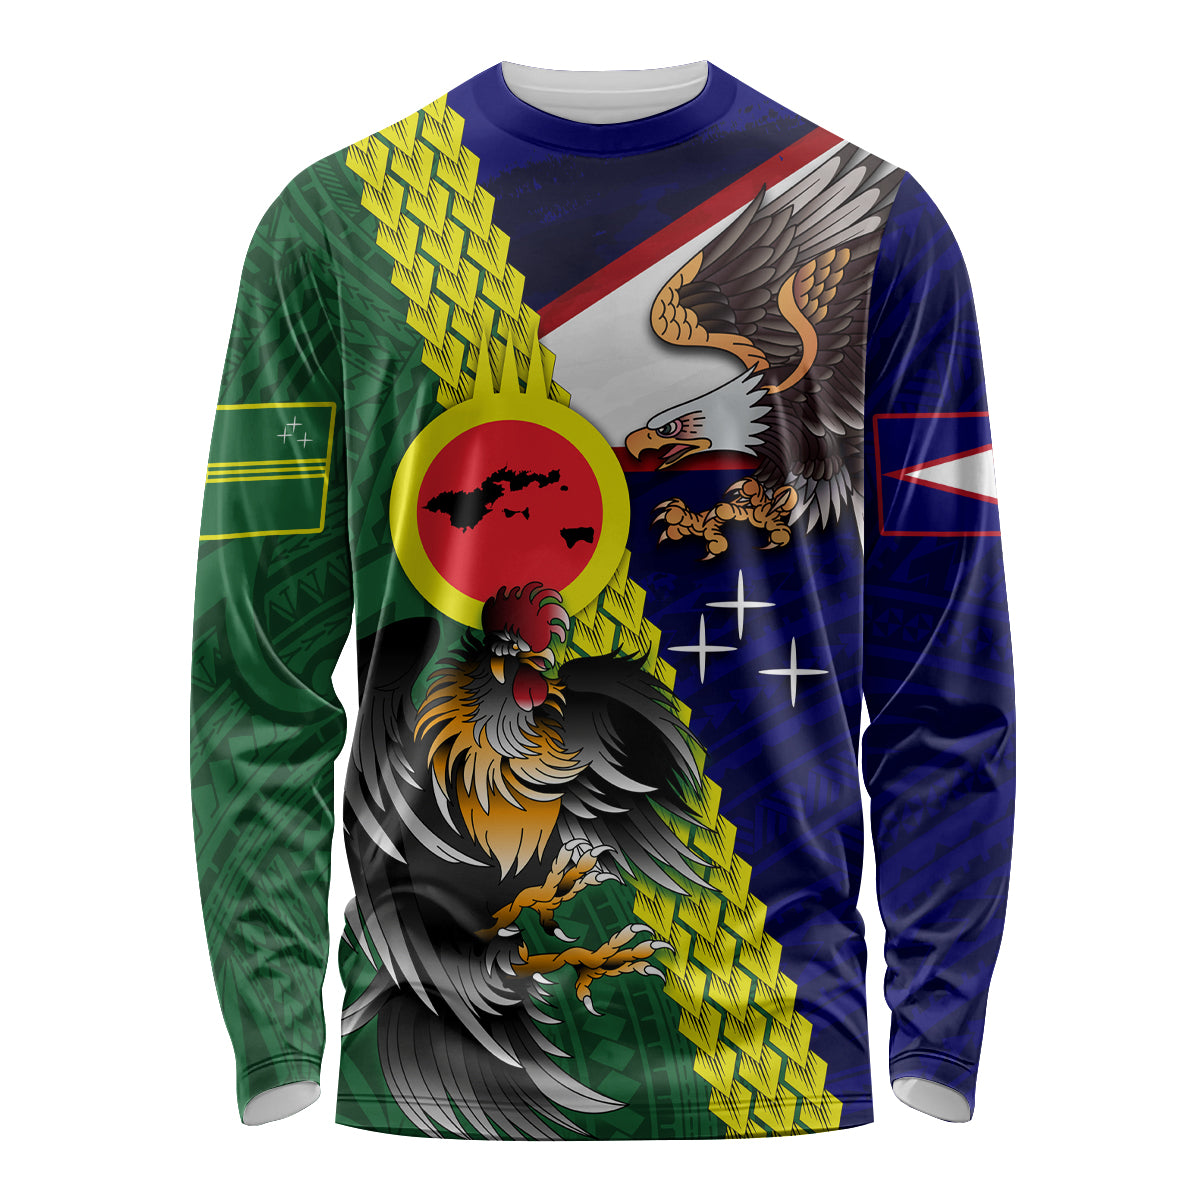 Manu'a Island and American Samoa Long Sleeve Shirt Rooster and Eagle Mascot